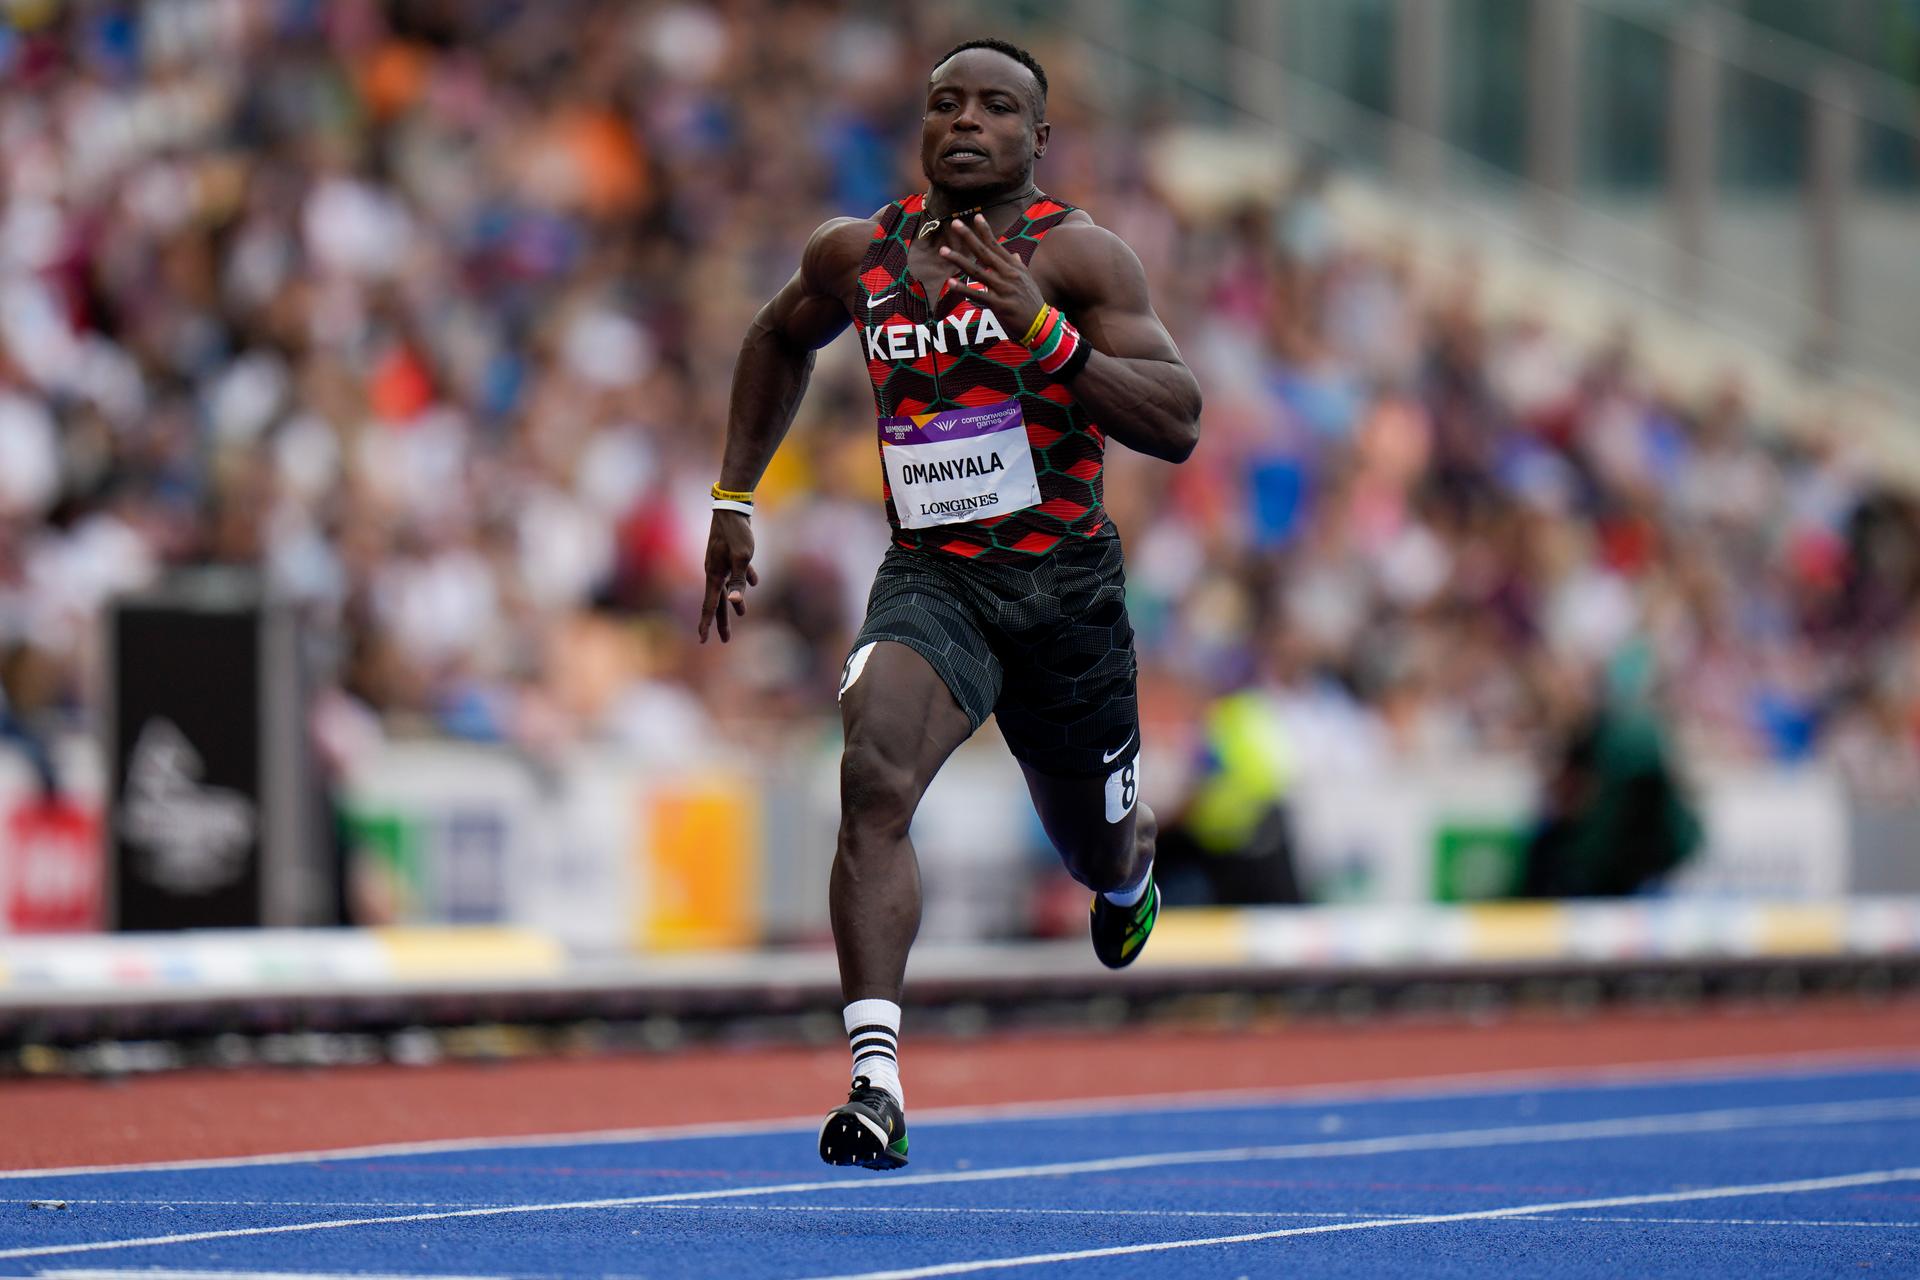 Ferdinand Omanyala of Kenya runs in his men's 100m heat during the athletics in the Alexander Stadium at the Commonwealth Games in Birmingham, England